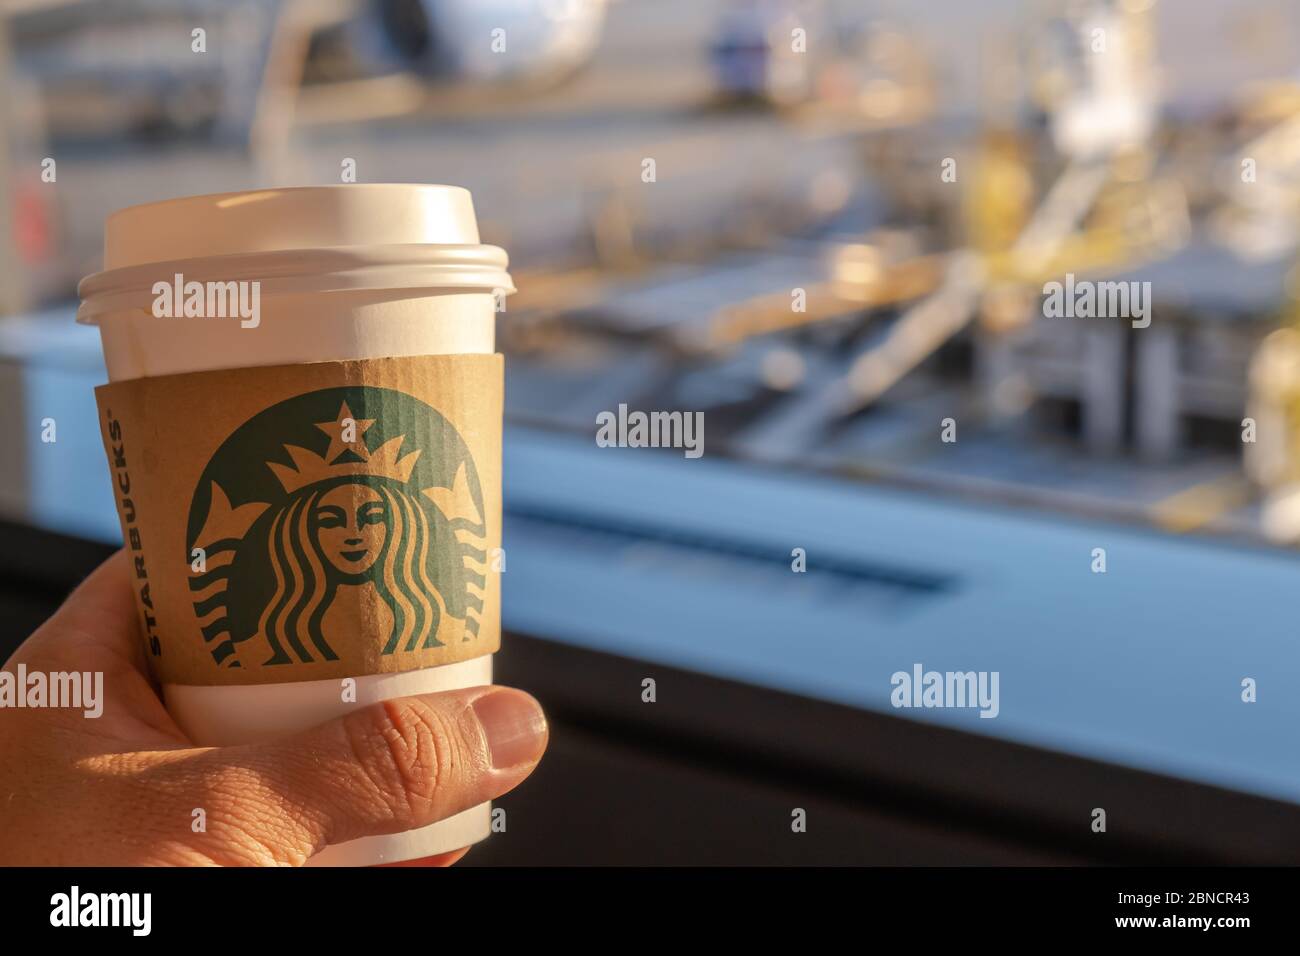 https://c8.alamy.com/comp/2BNCR43/chiba-japan-march-24-2019-hand-holding-starbucks-coffee-cup-with-brand-logo-at-narita-international-airport-chiba-japan-2BNCR43.jpg